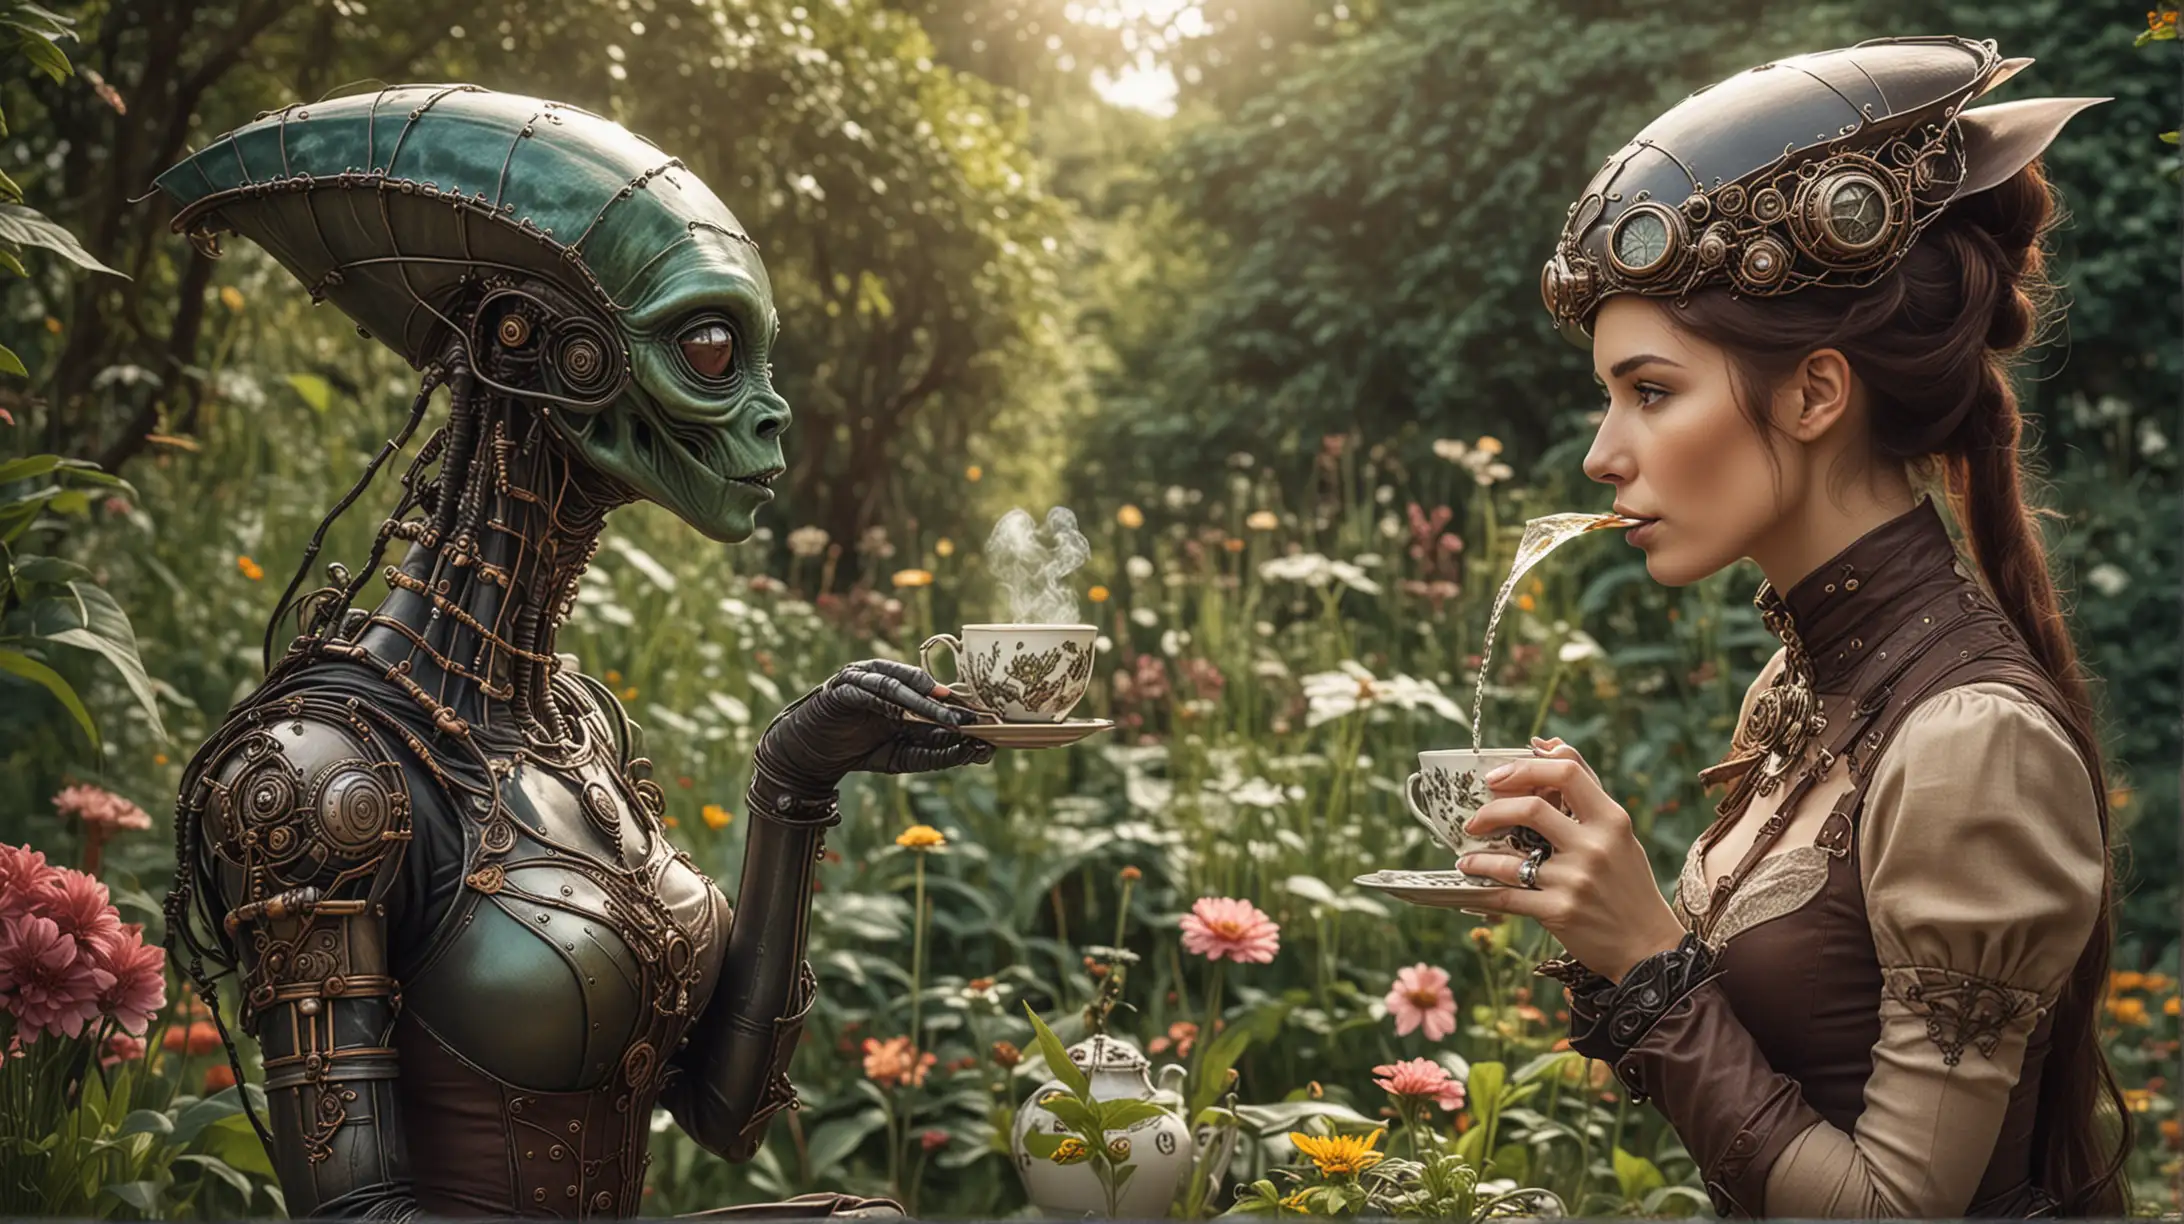 A beautiful steampunk woman drinks tea with an alien being in a garden